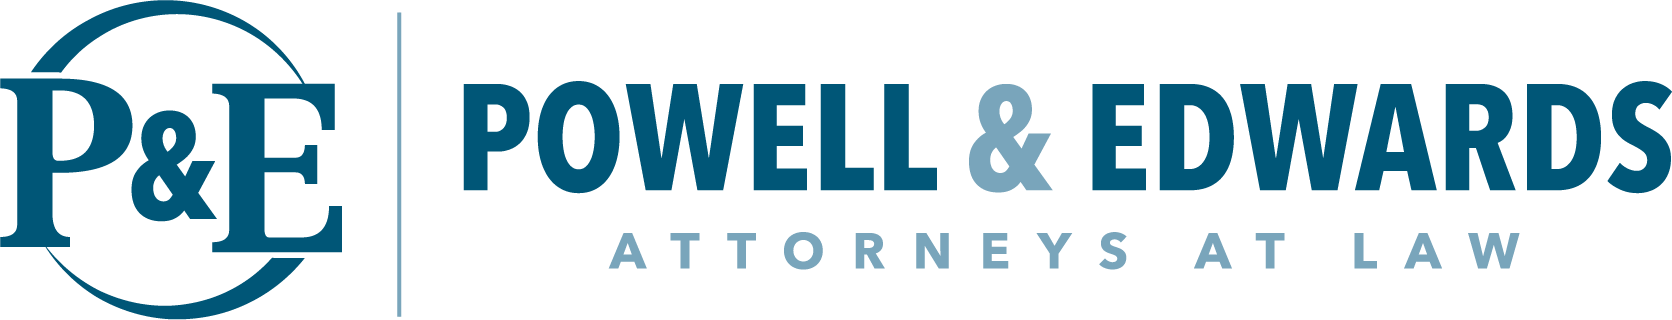 PowellEdwards_Logo (002).png